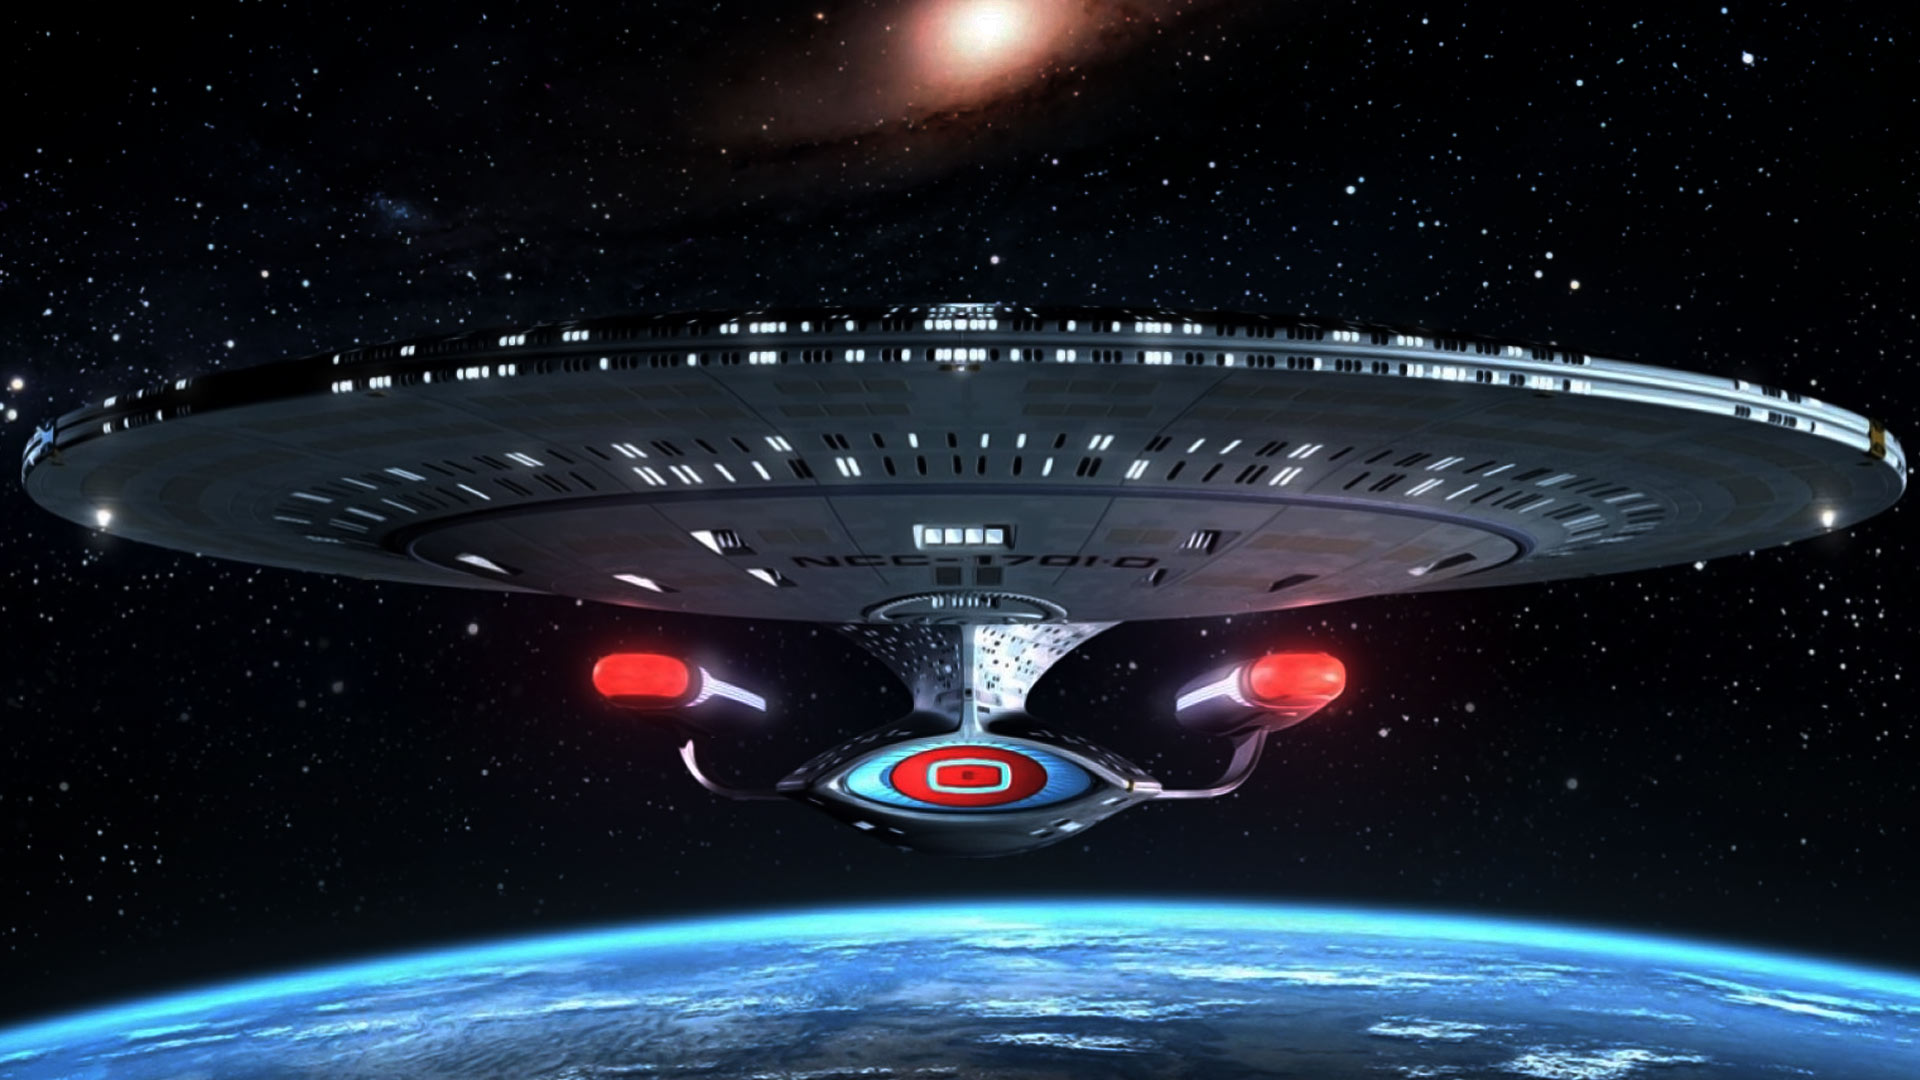 Sci Fi Star Trek Wallpaper HD Imagebank Biz